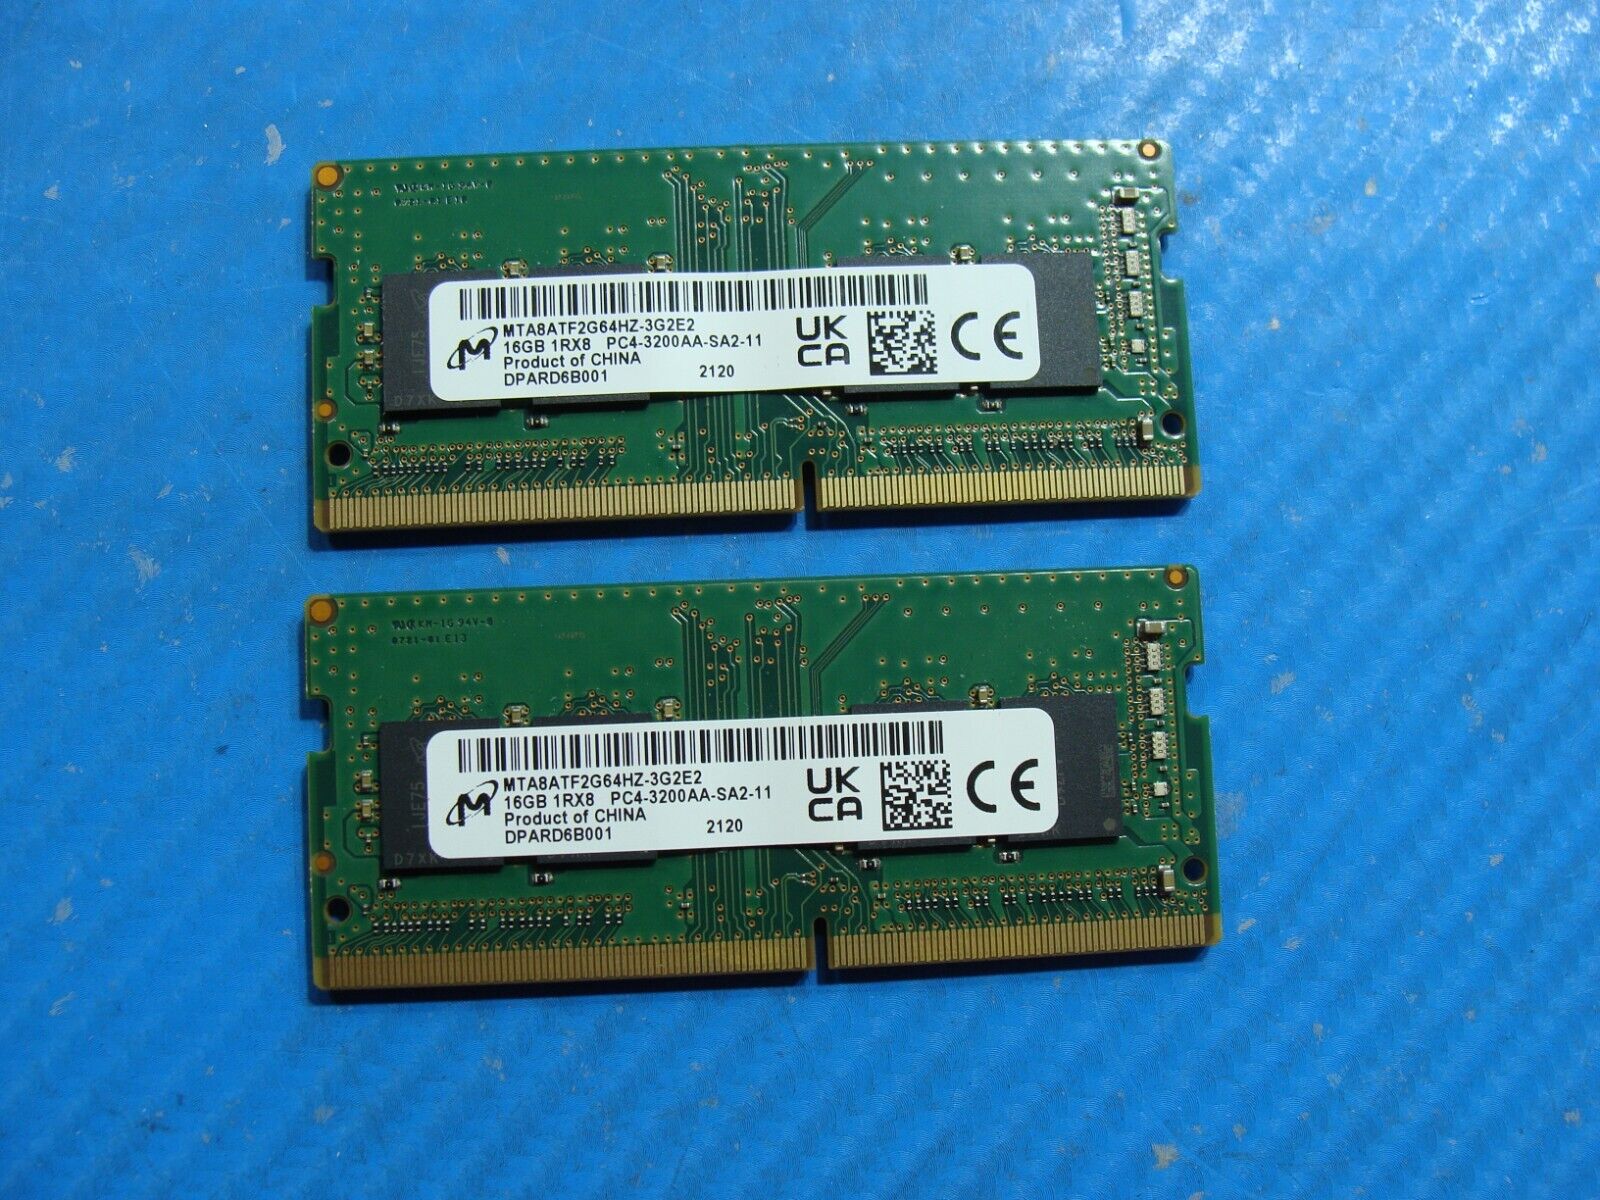 HP 830 G7 Micron 32GB (2x16GB) PC4-3200A Memory RAM SO-DIMM MTA8ATF2G64HZ-3G2E2